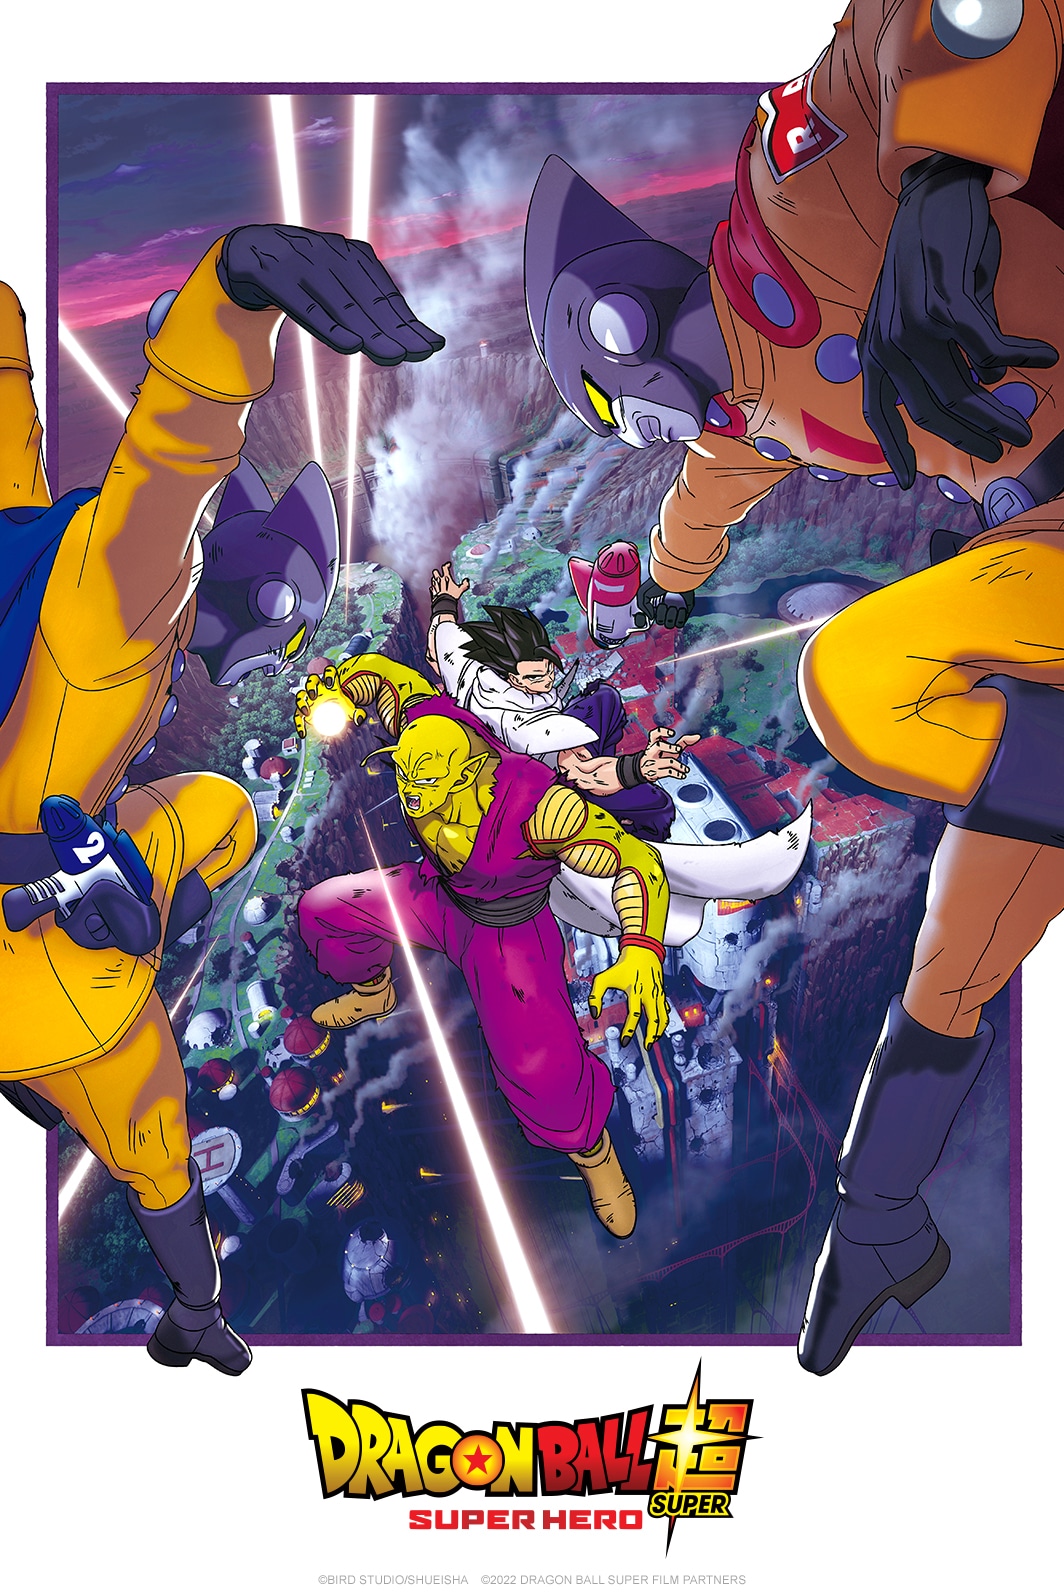 Dragon Ball Super: SUPER HERO Film Poster. Art © Toei Animation, Crunchyroll, Sony Pictures